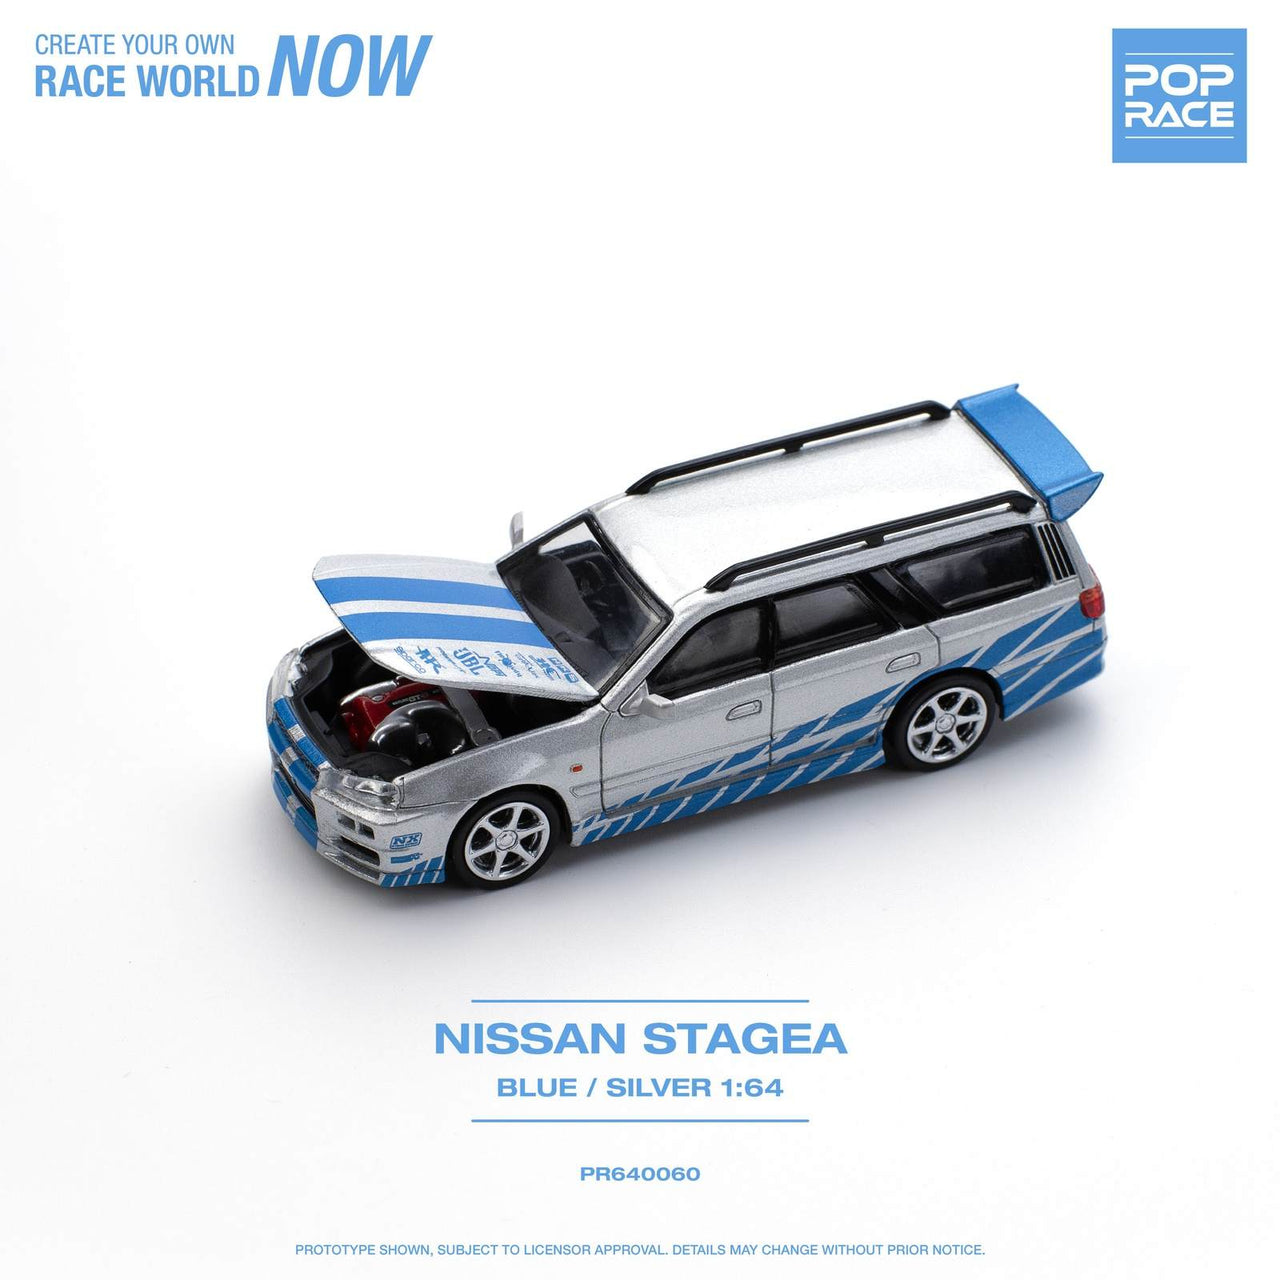 Pop Race 1:64 Nissan Stagea Fast & Furious Blue/Silver